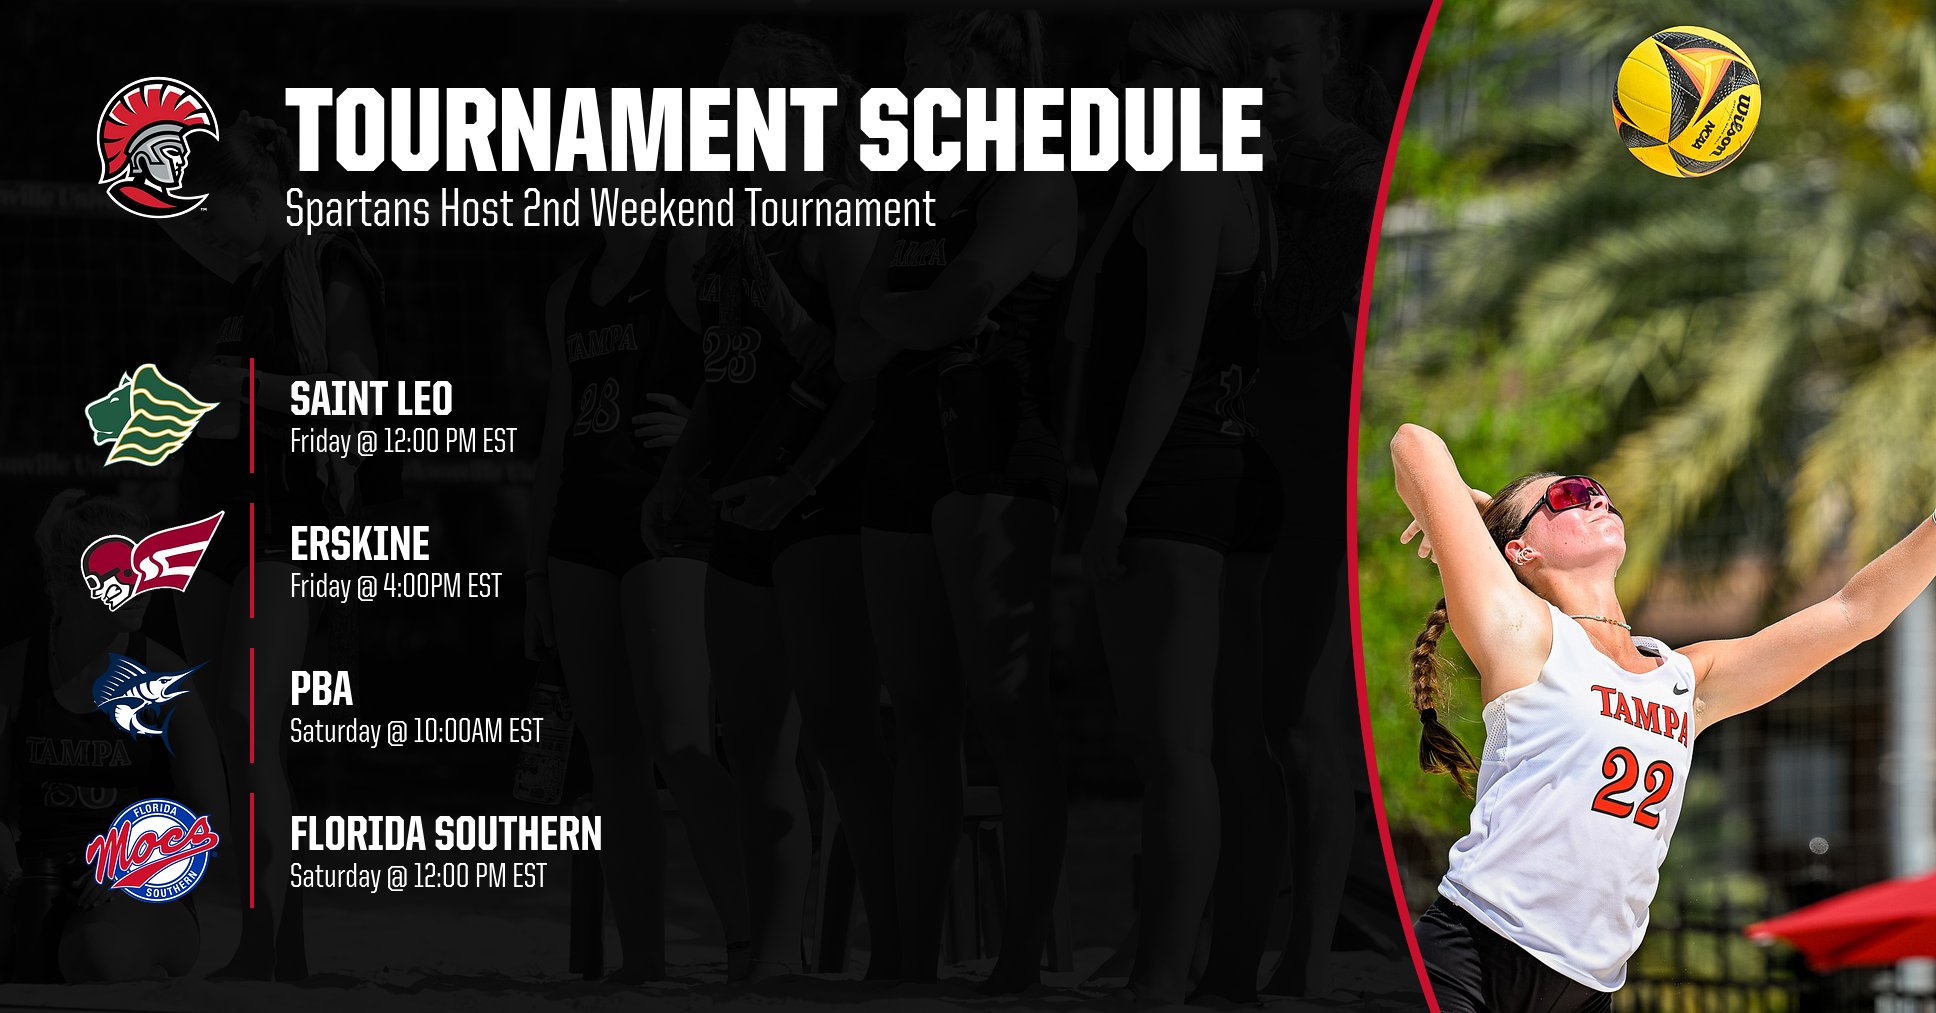 Tampa Tournament Schedule